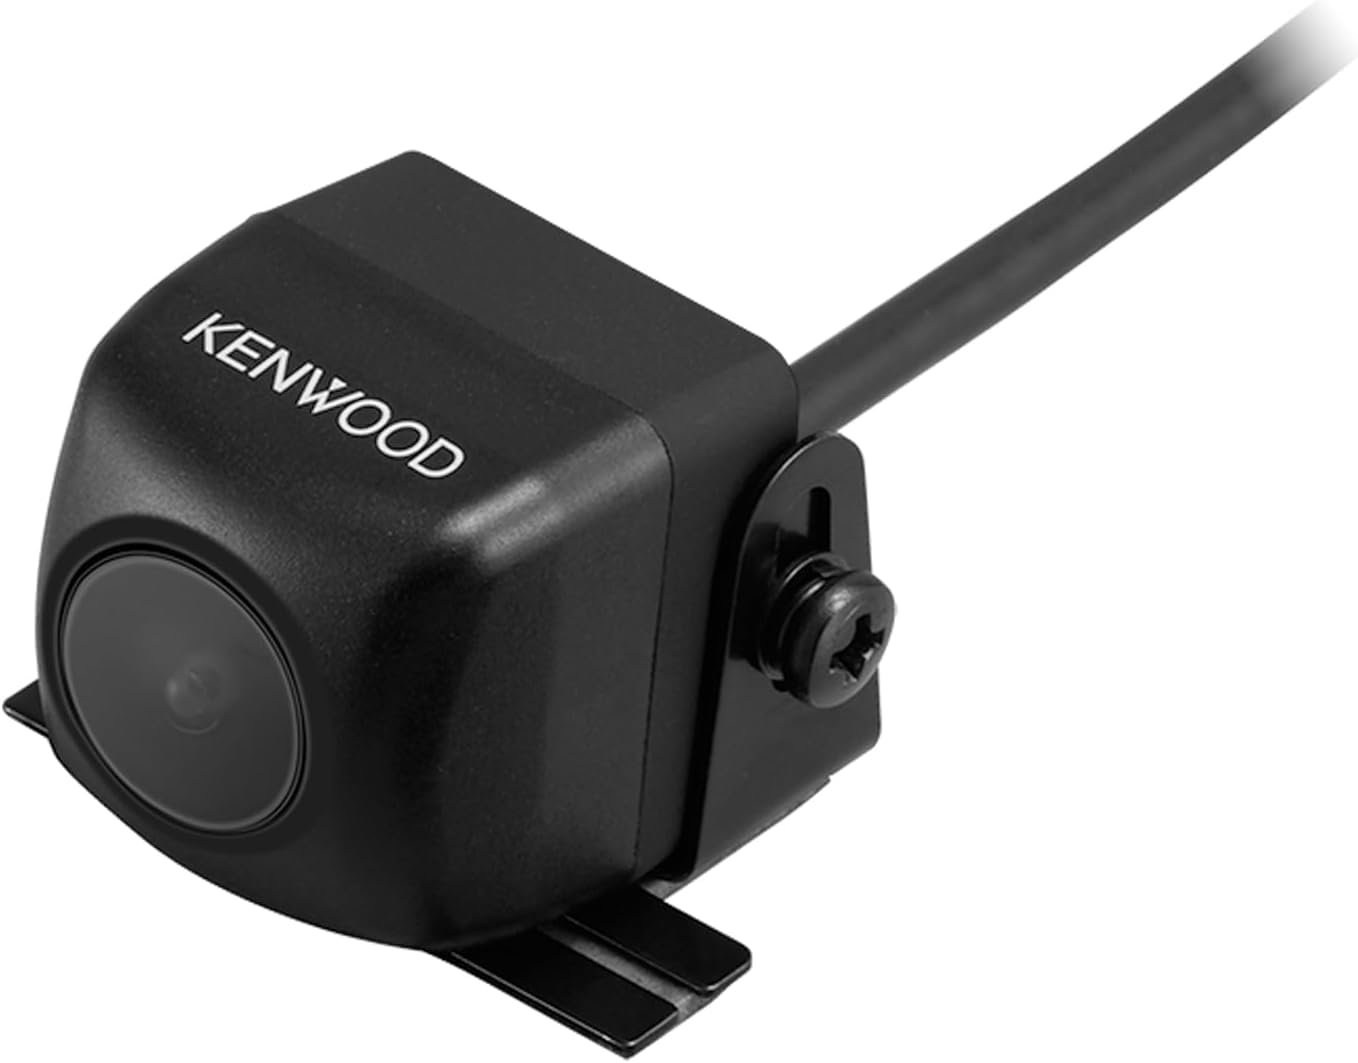 Kenwood DNX577S 6.8" Apple CarPlay Android Auto GPS Car Stereo + CMOS-230LP Backup Camera